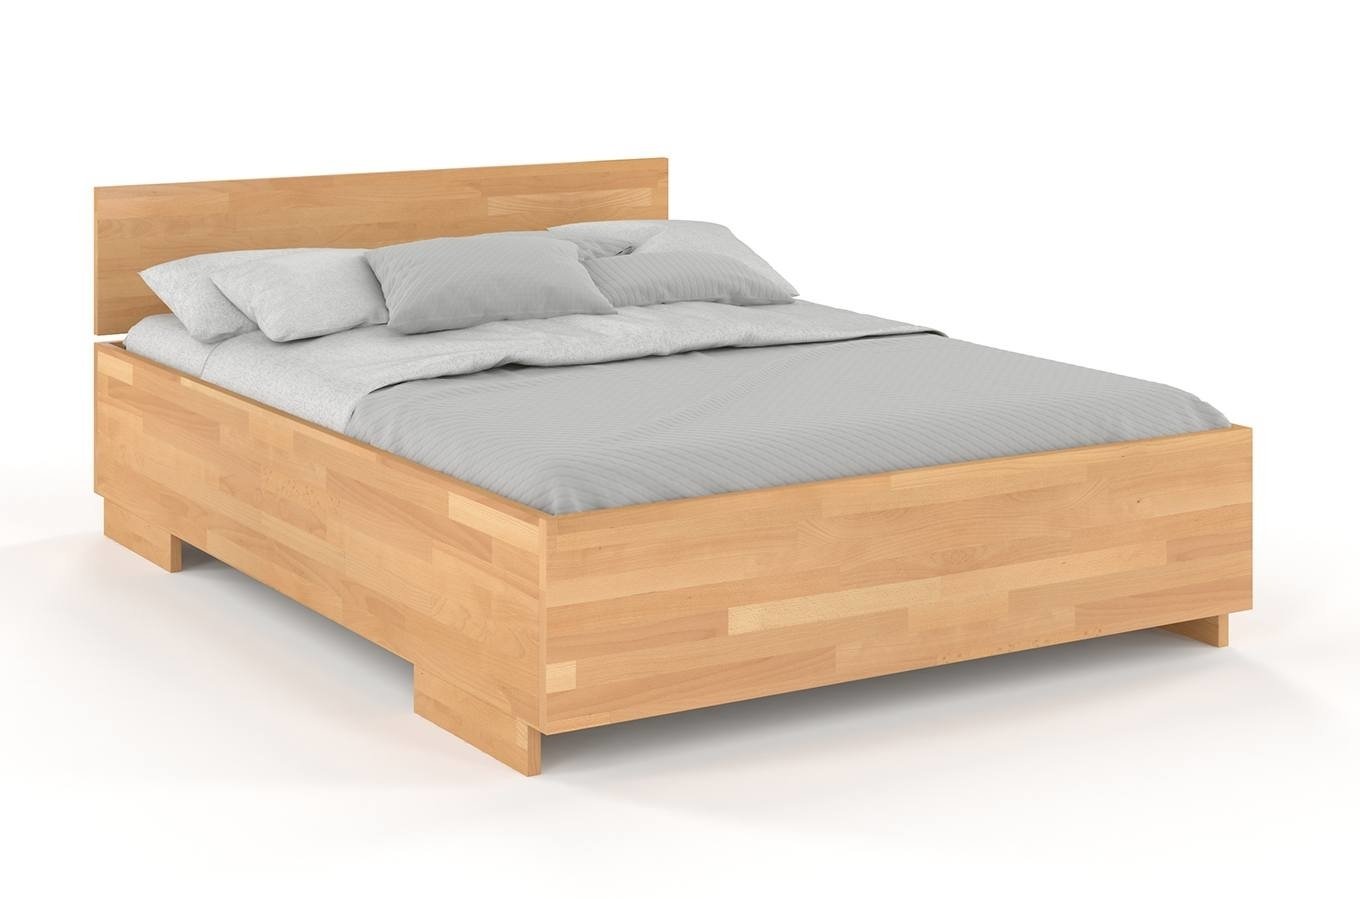 Łóżko drewniane bukowe Visby Bergman High / 120x200 cm, kolor naturalny